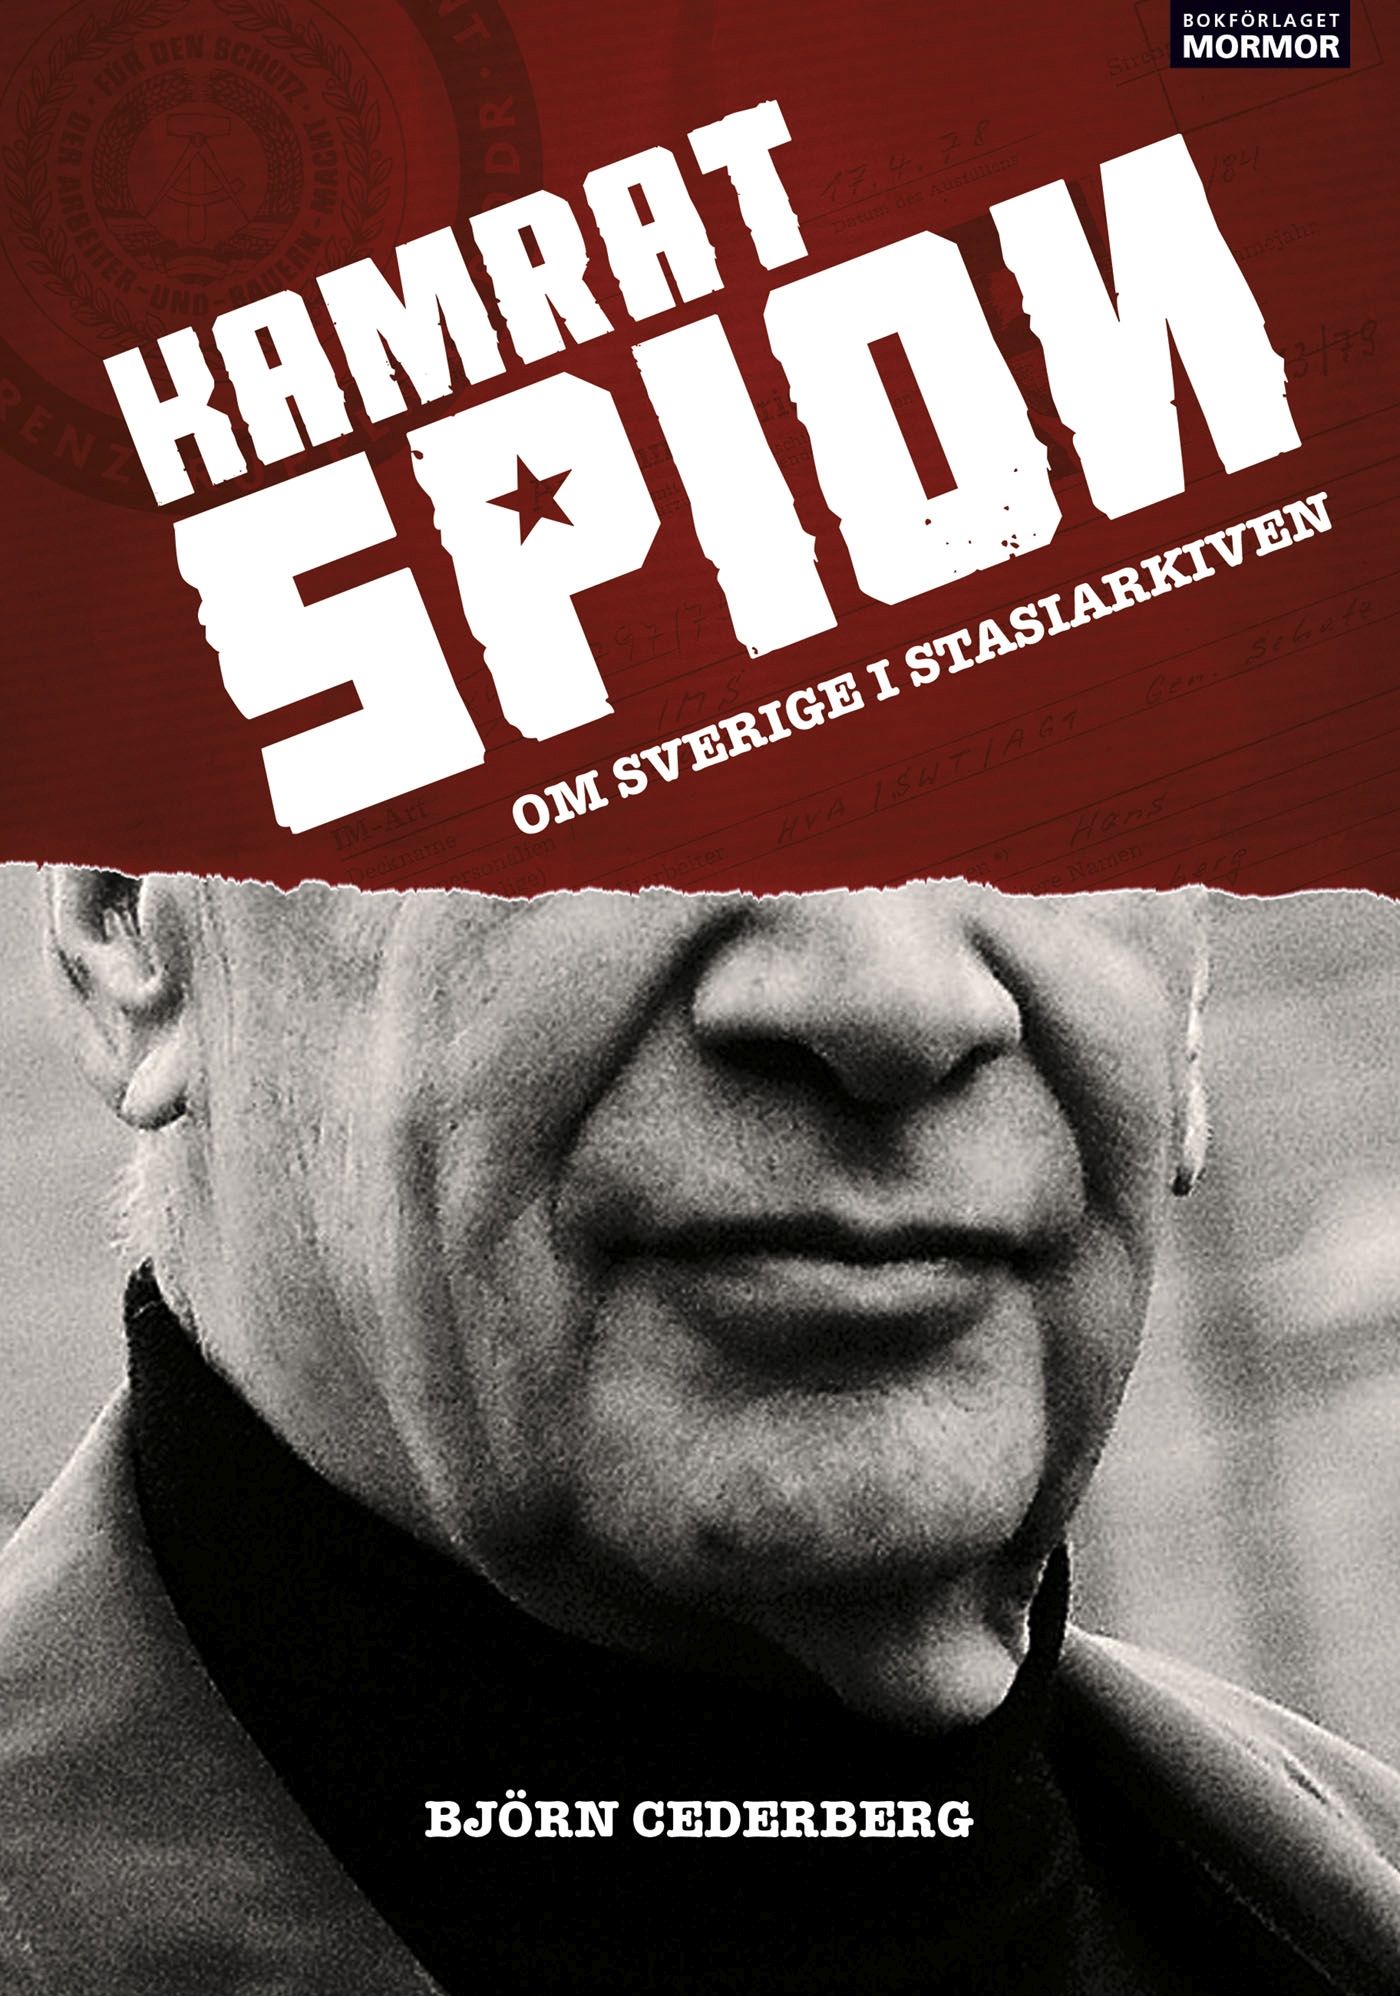 Kamrat, spion - Om Sverige i Stasiarkiven, eBook by Björn Cederberg